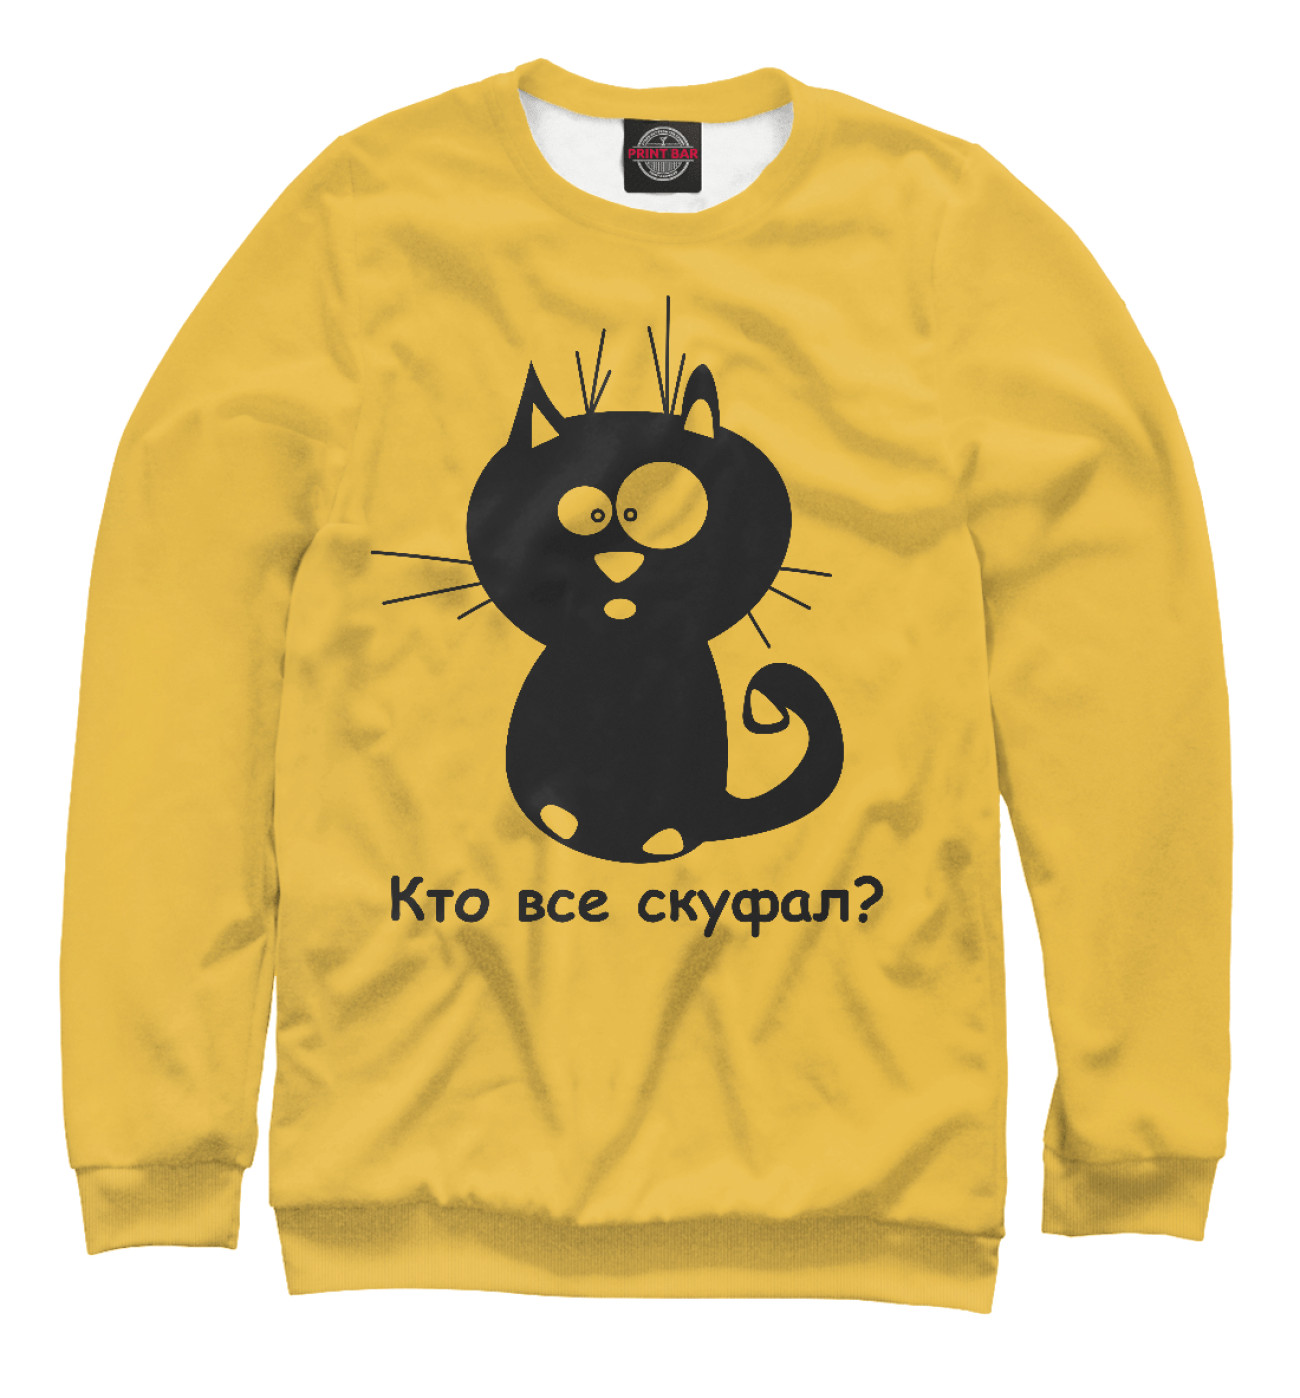 Мужской Свитшот Удивлённый кот на жёлтом фоне, артикул: CAT-322794-swi-2